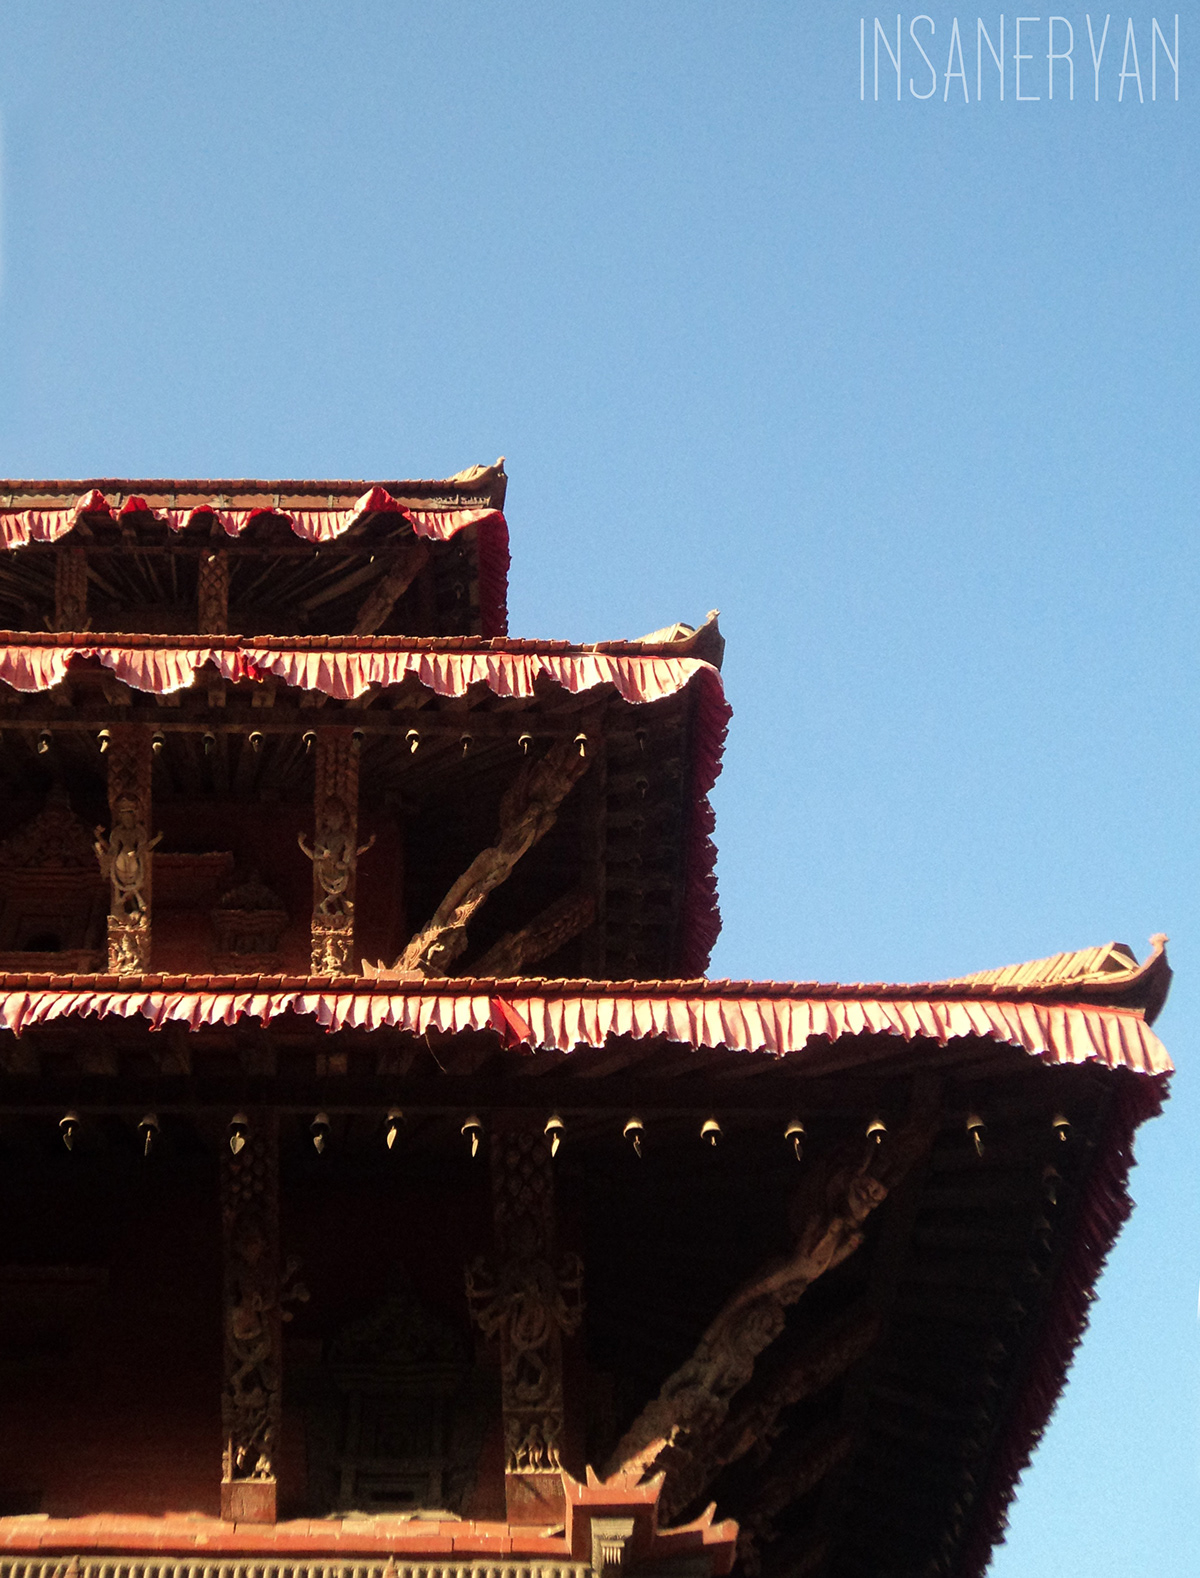 heritage  tour nepal patan Bhaktapur culture kathmandu insaneryan rajendra  clicks photos